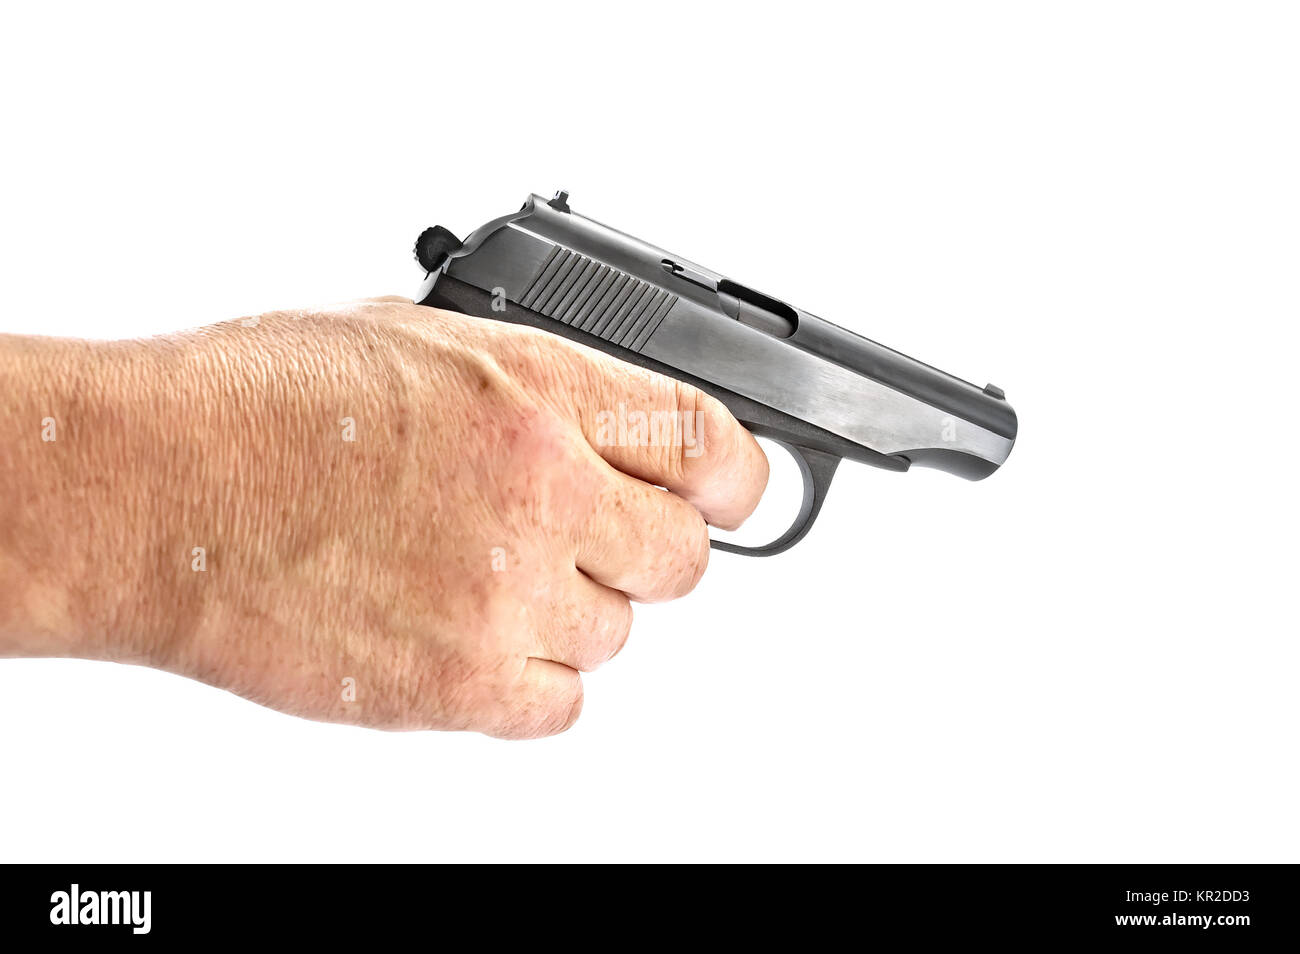 Pistol in hand Stock Photo - Alamy